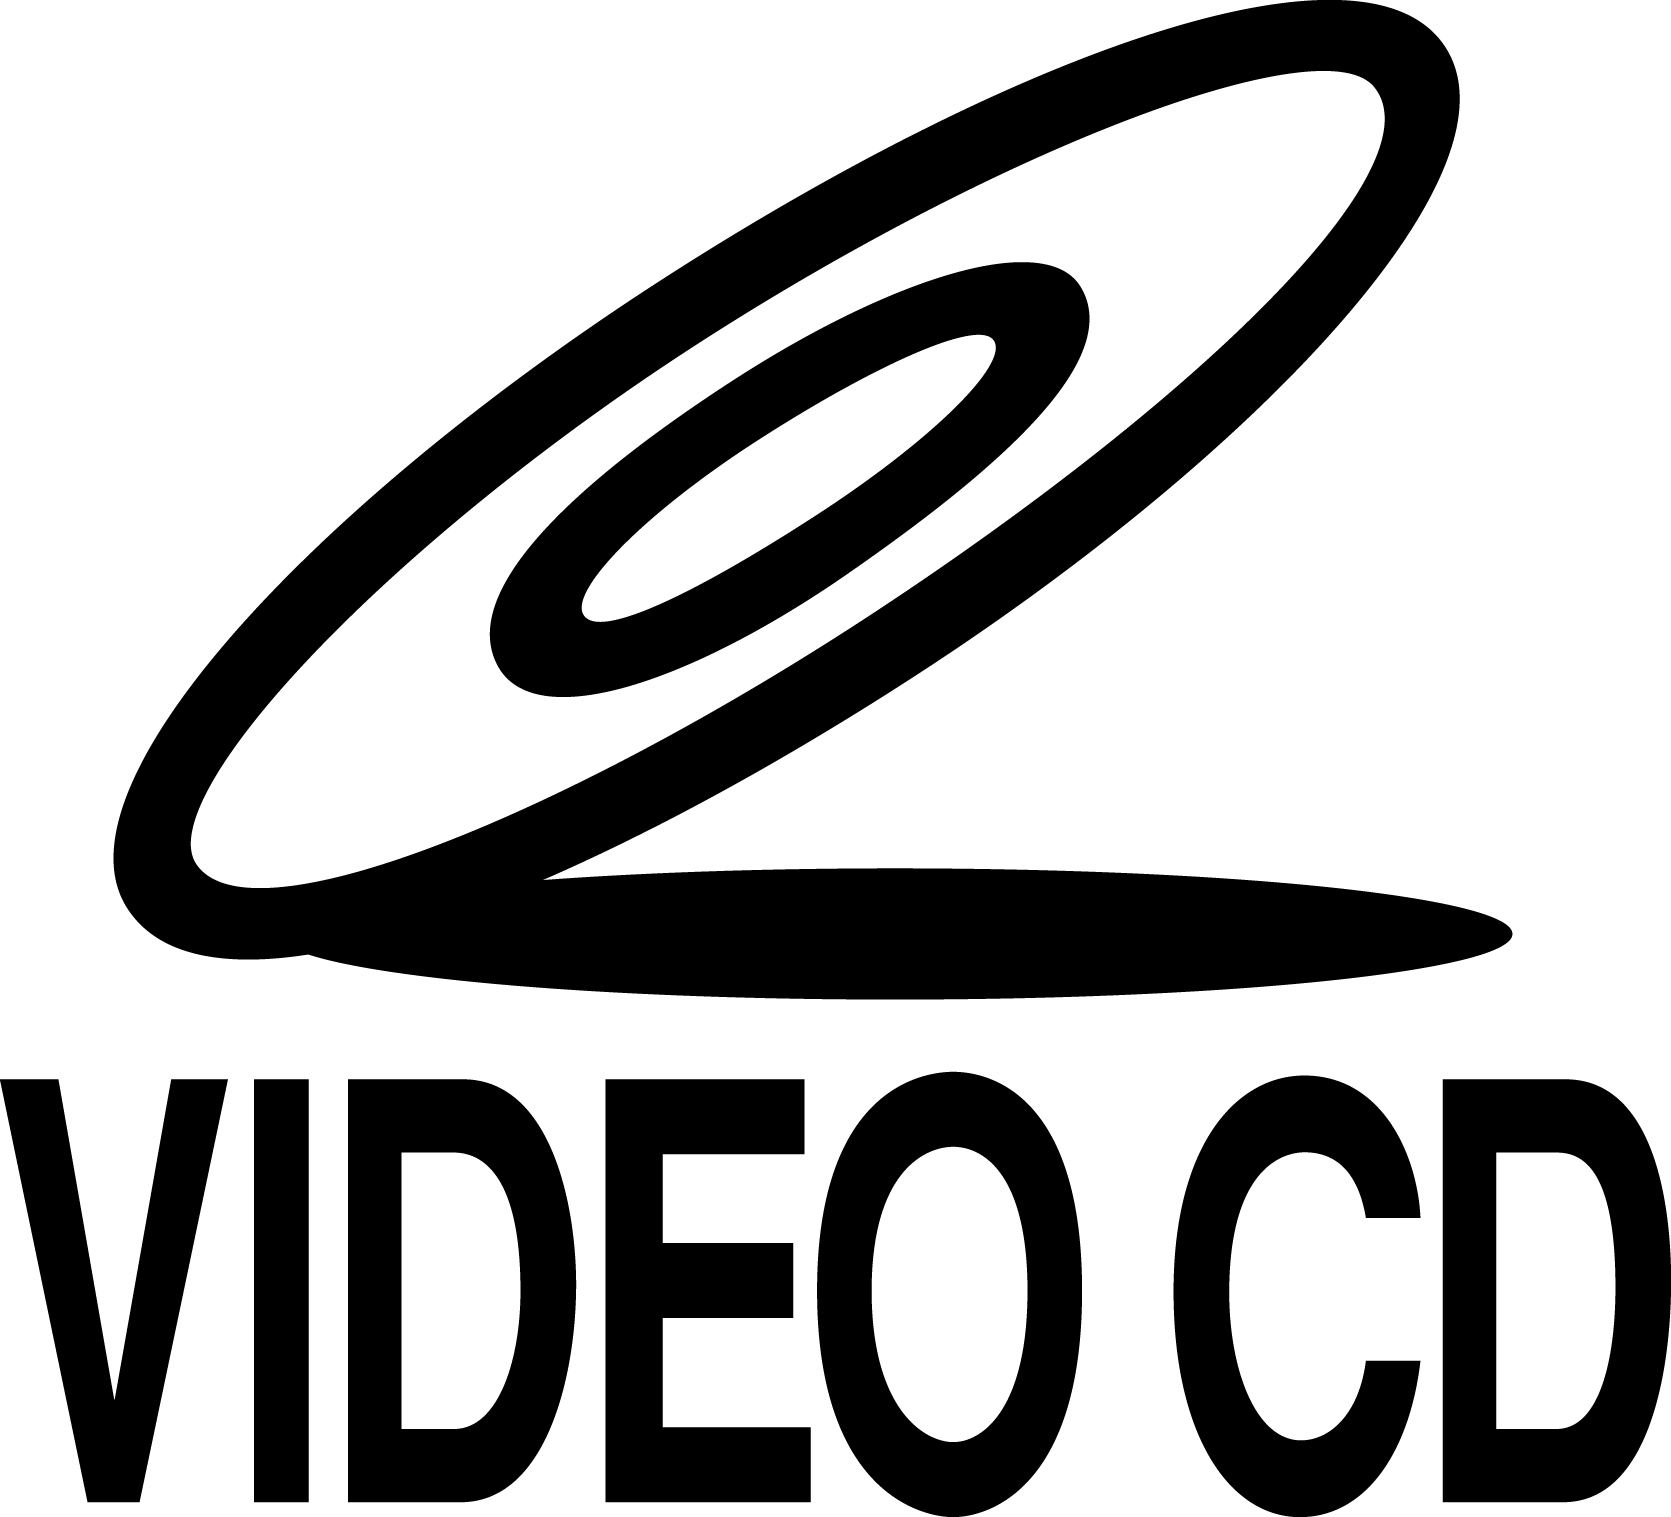 Dvd Logo Images Clipart Best